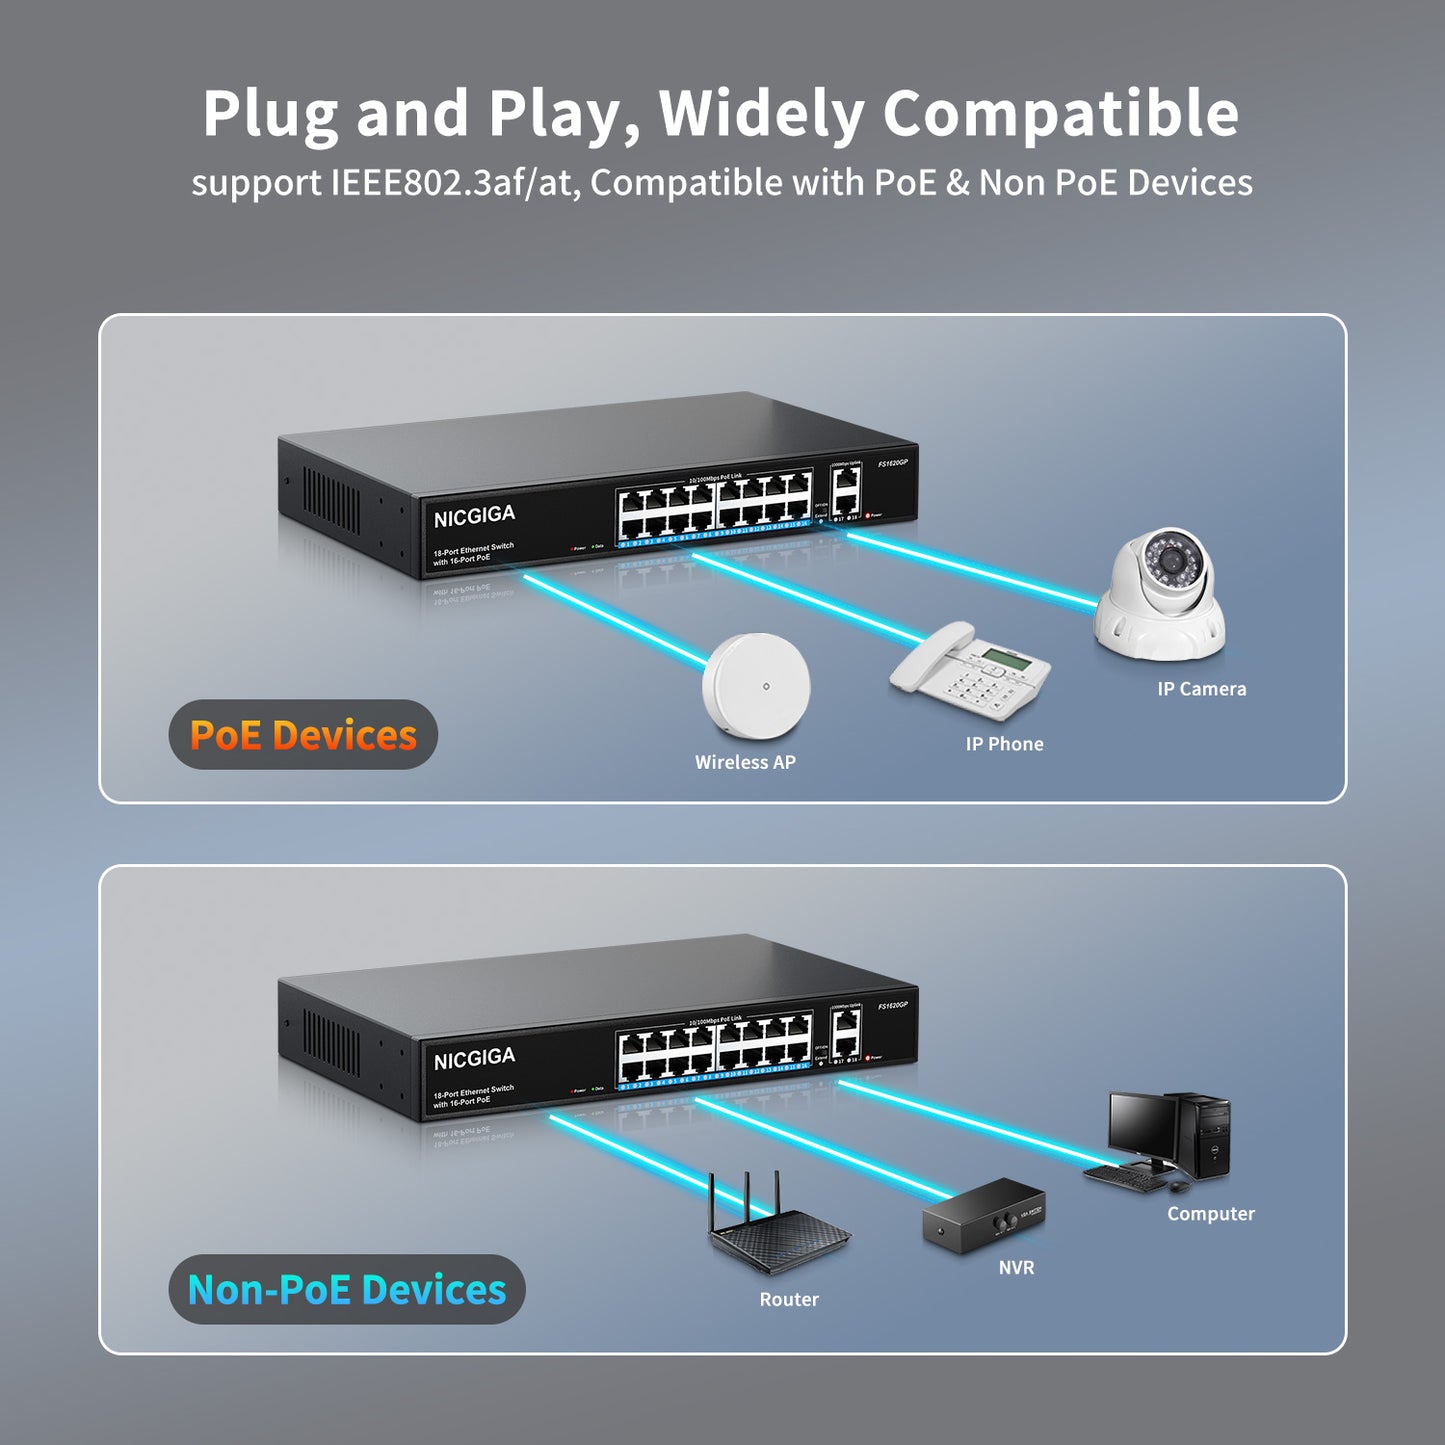 16 Port PoE Switch@250W with 2 Gigabit Uplink Port, NICGIGA 18 Port Ethernet PoE Switch, VLAN Mode, Extend to 250m, Sturdy Metal Case, 19 inch RackMount, Plug and Play, Unmanaged